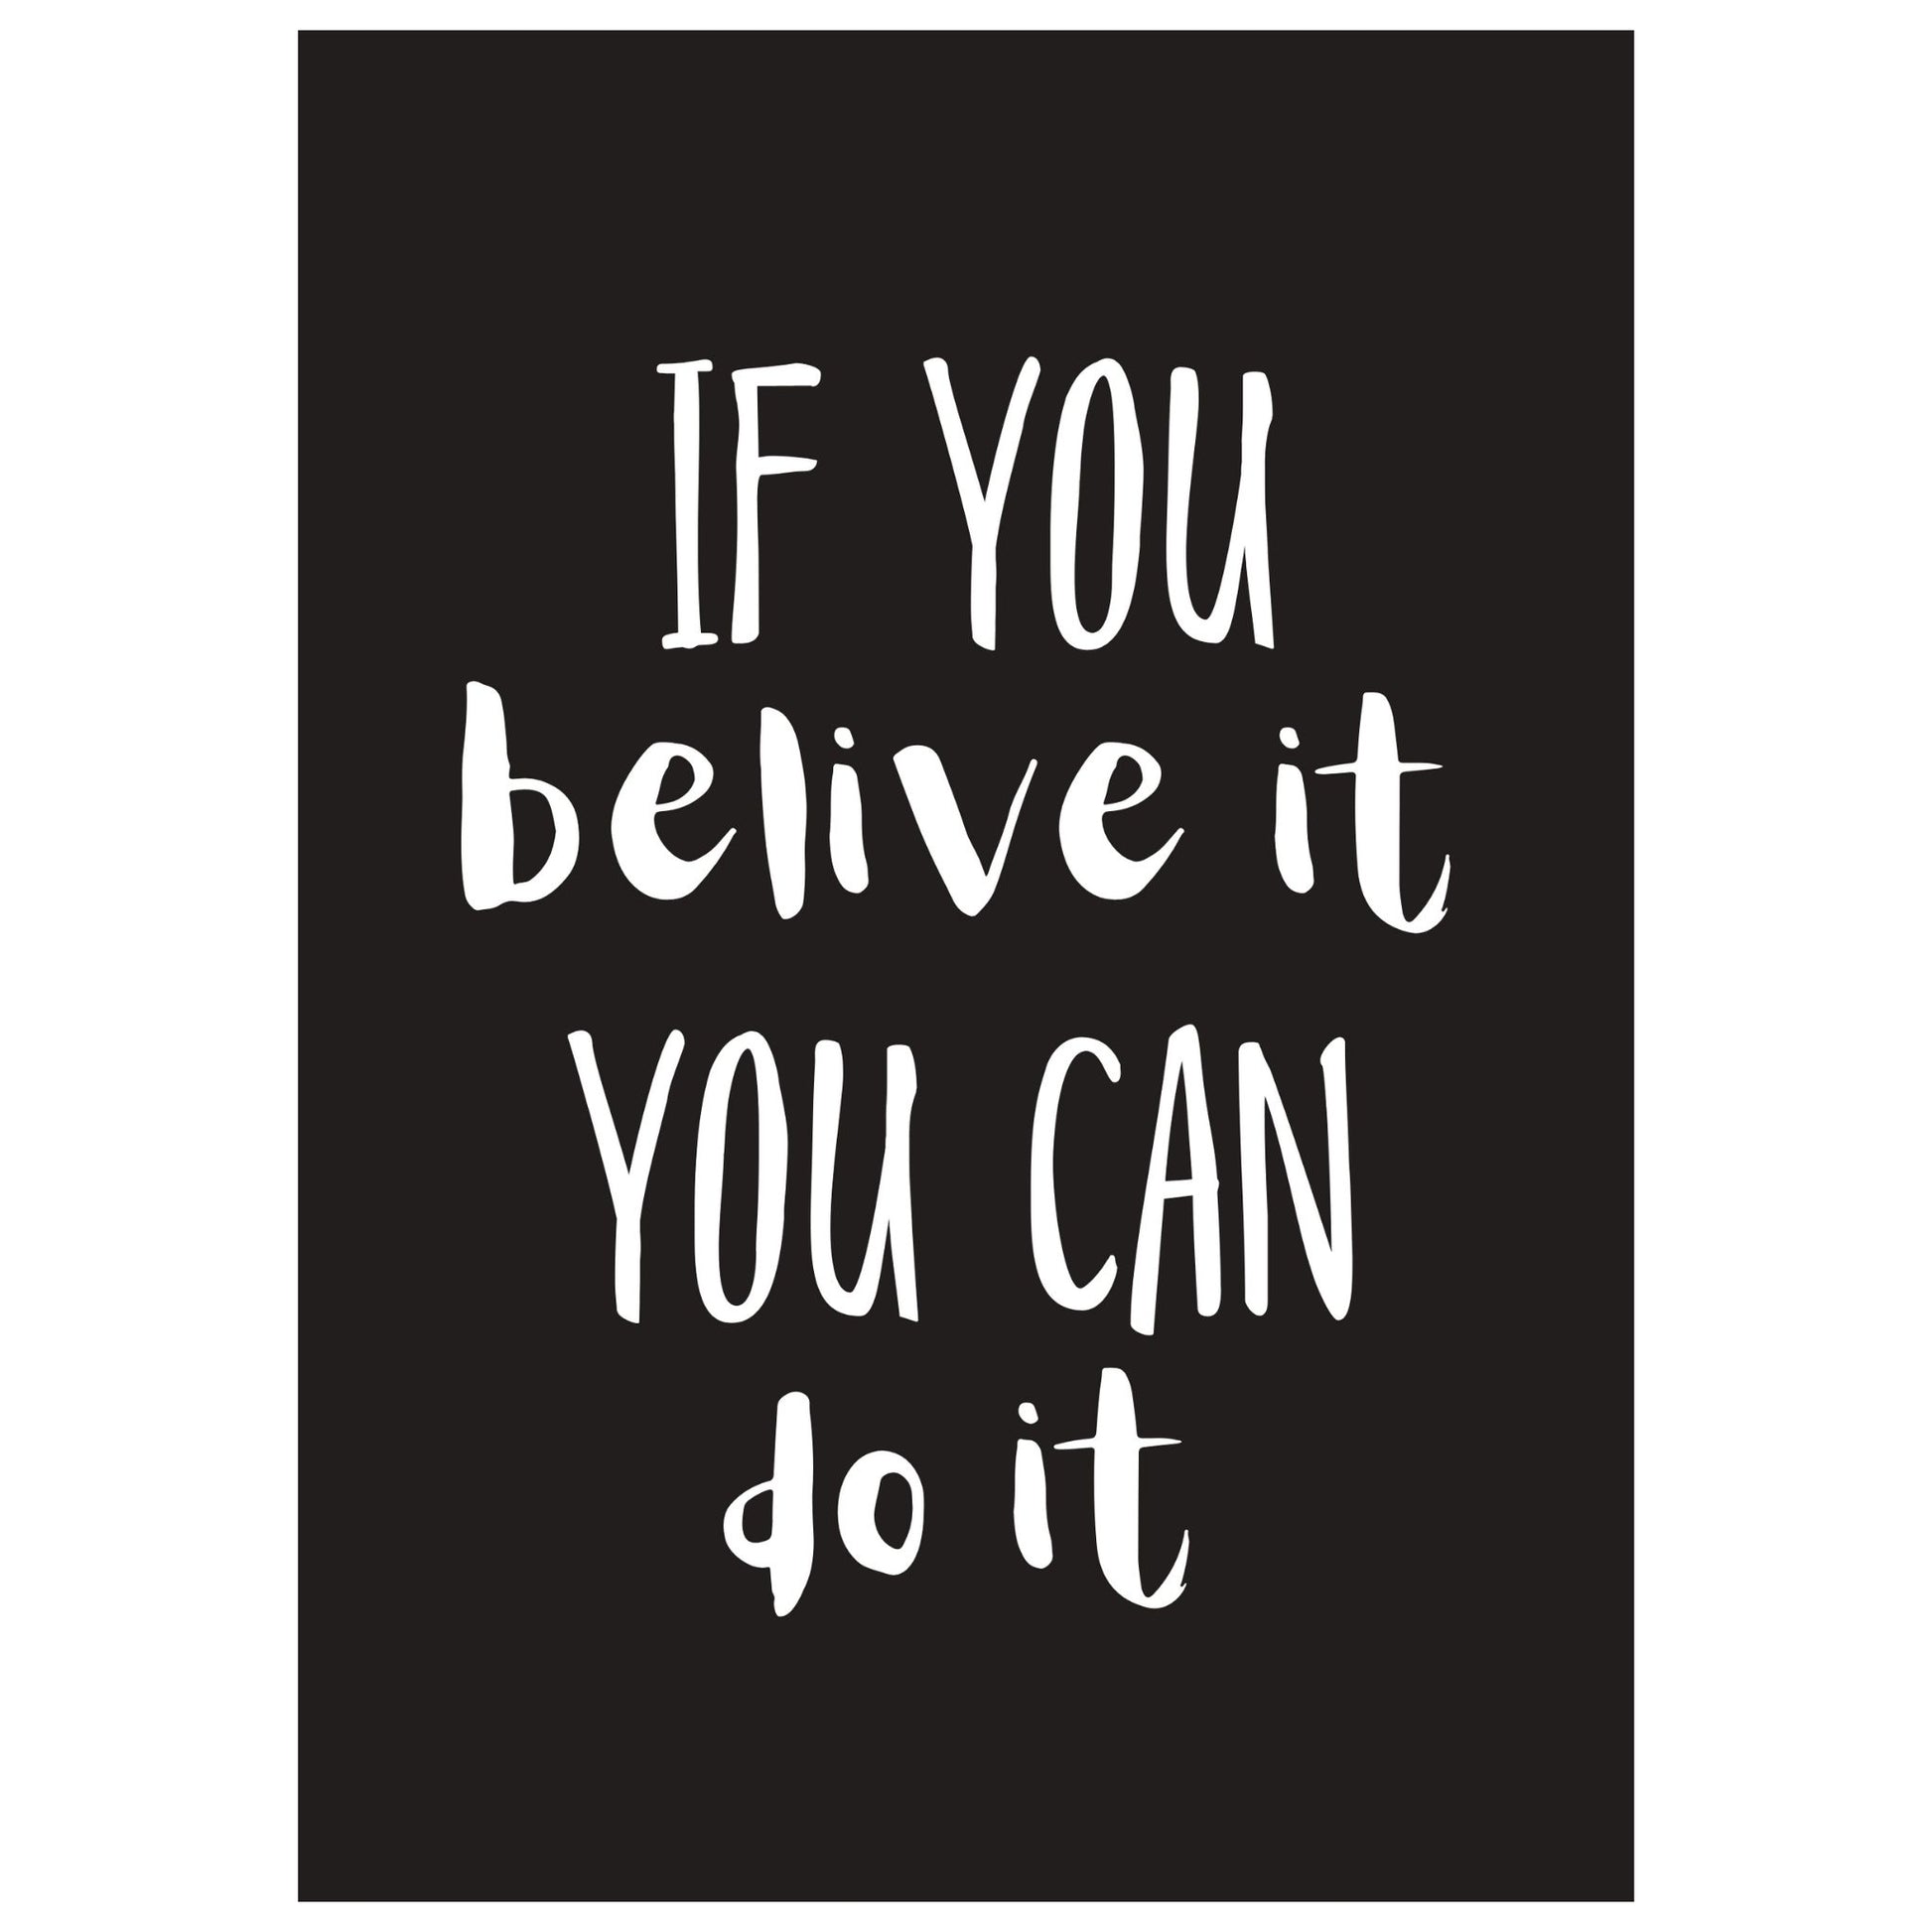 Grafisk tekstplakat med hvit skrift på sort bakgrunn og tekst "If you belive it, you can do it".